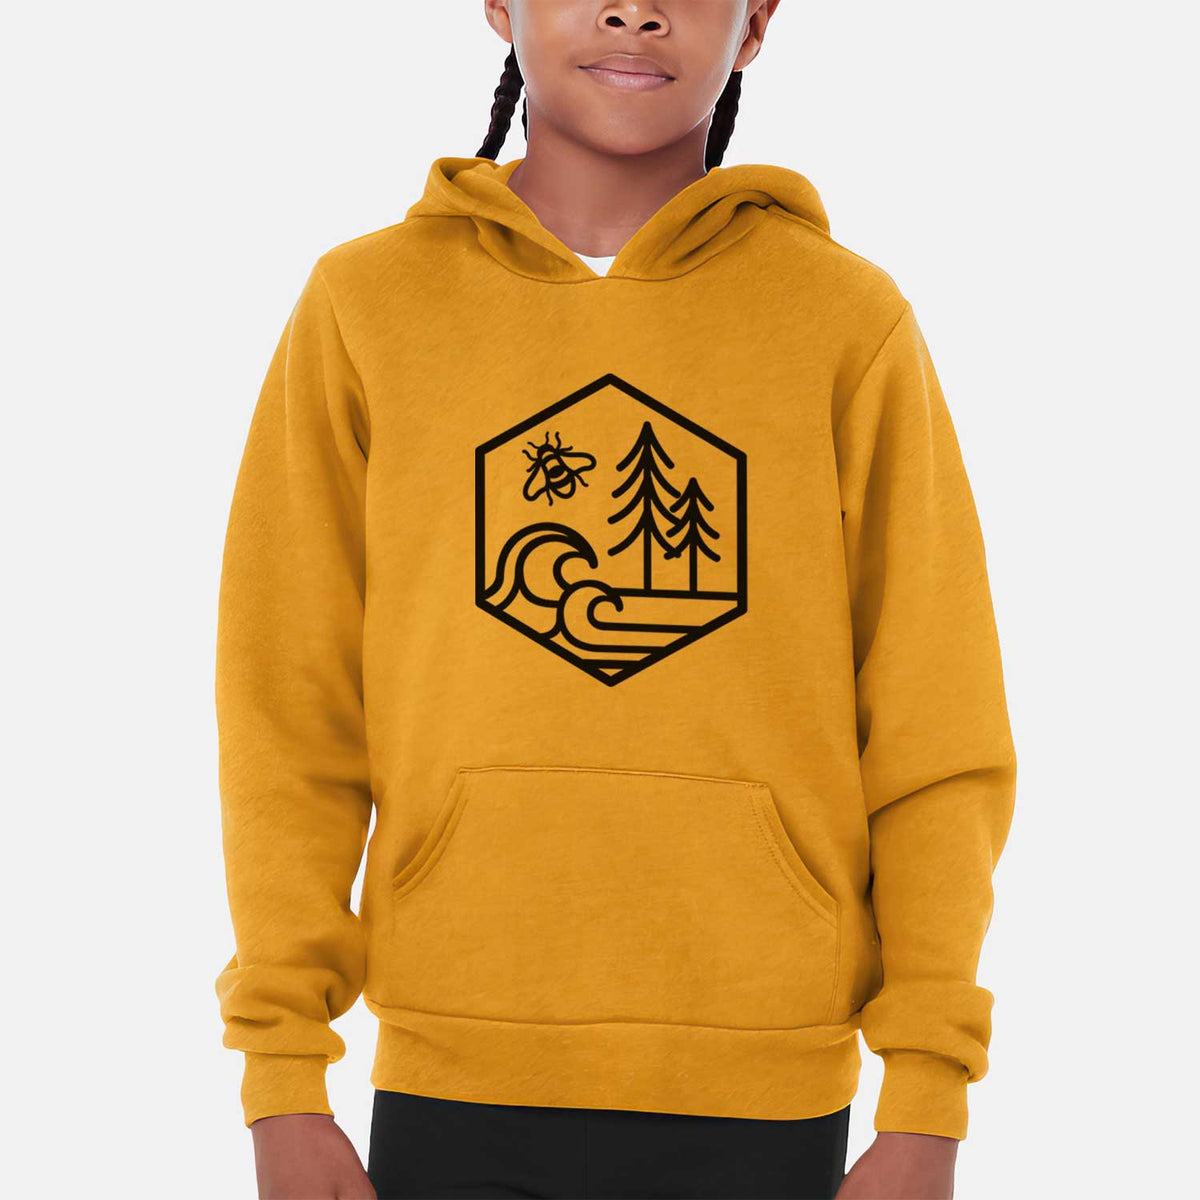 Harmonious Hexagon - Bees, Seas, Trees - Youth Hoodie Sweatshirt